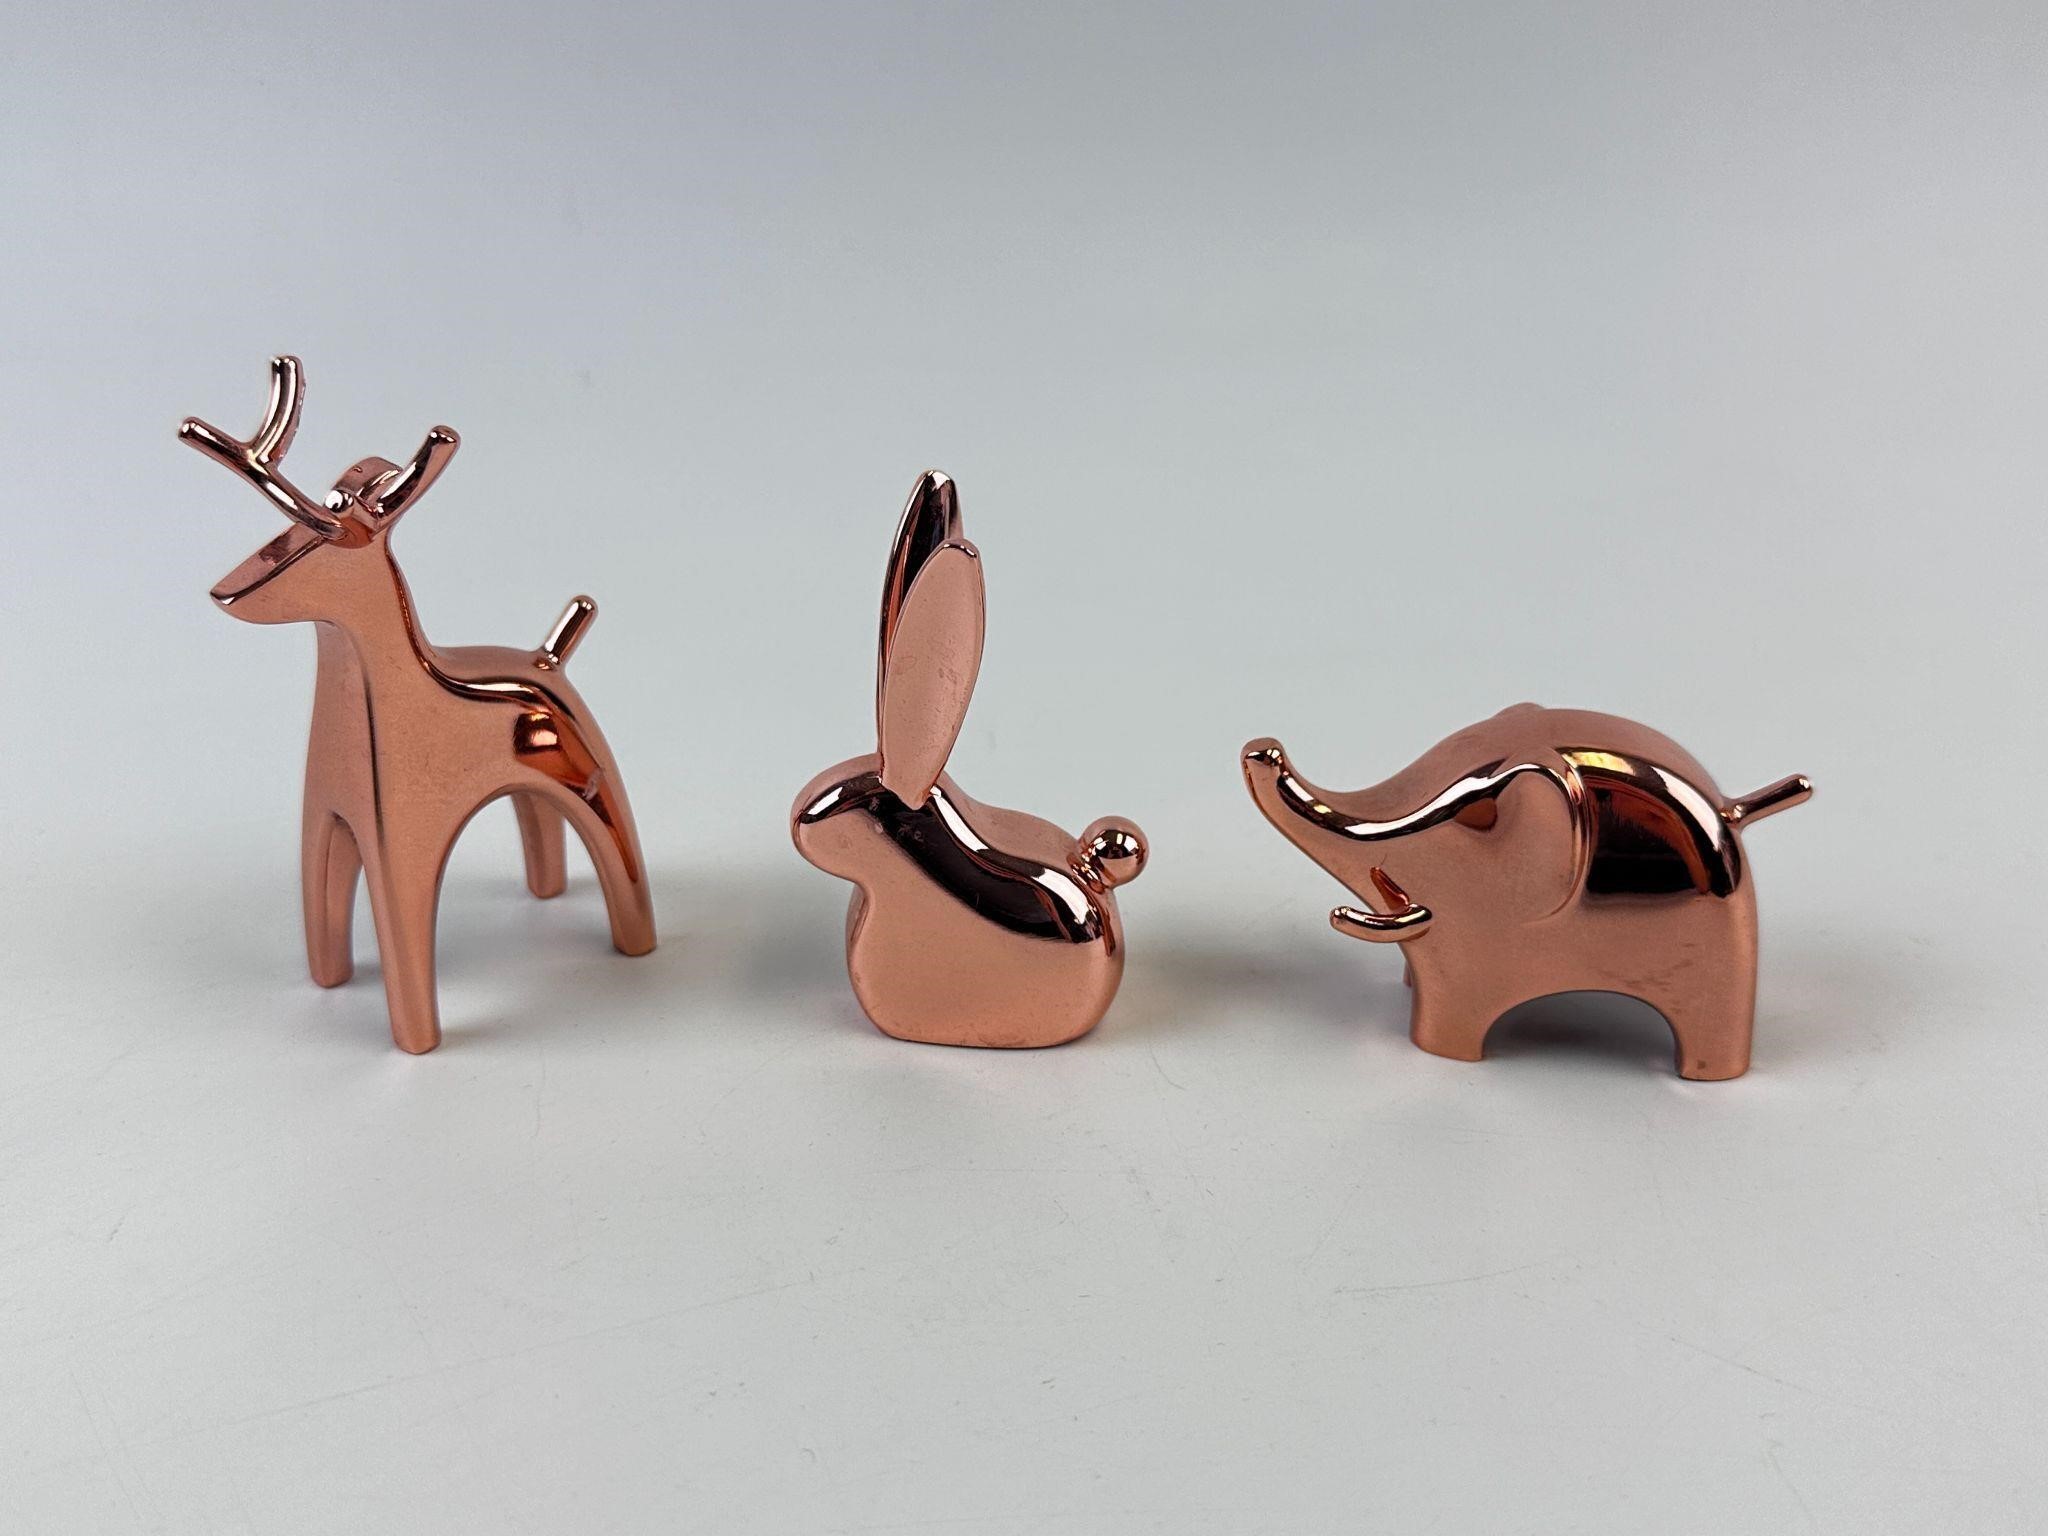 Umbra Copper Color Ring Holders Figurines